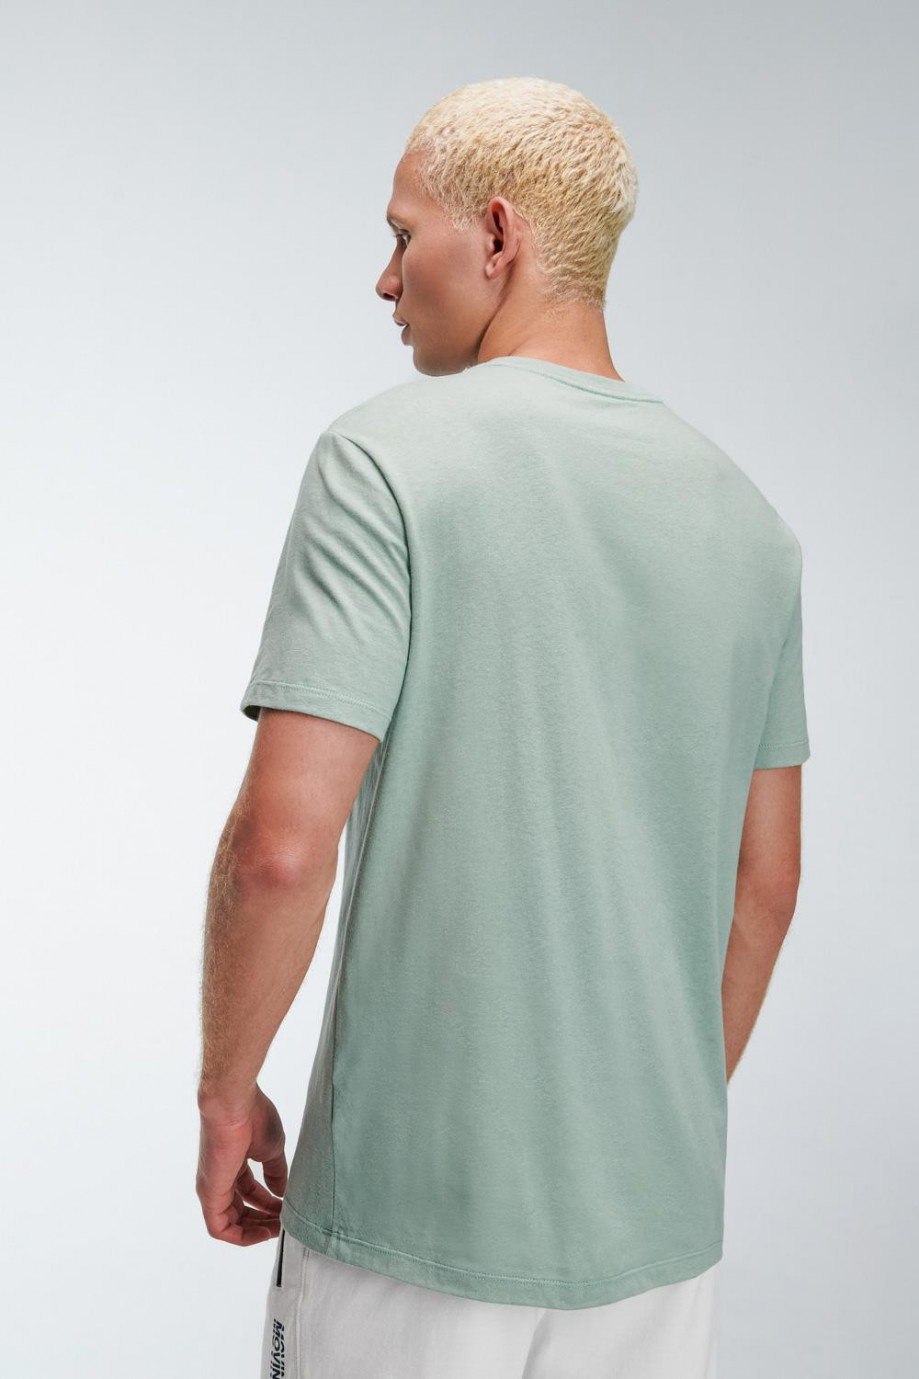 Camiseta manga corta con estampado.